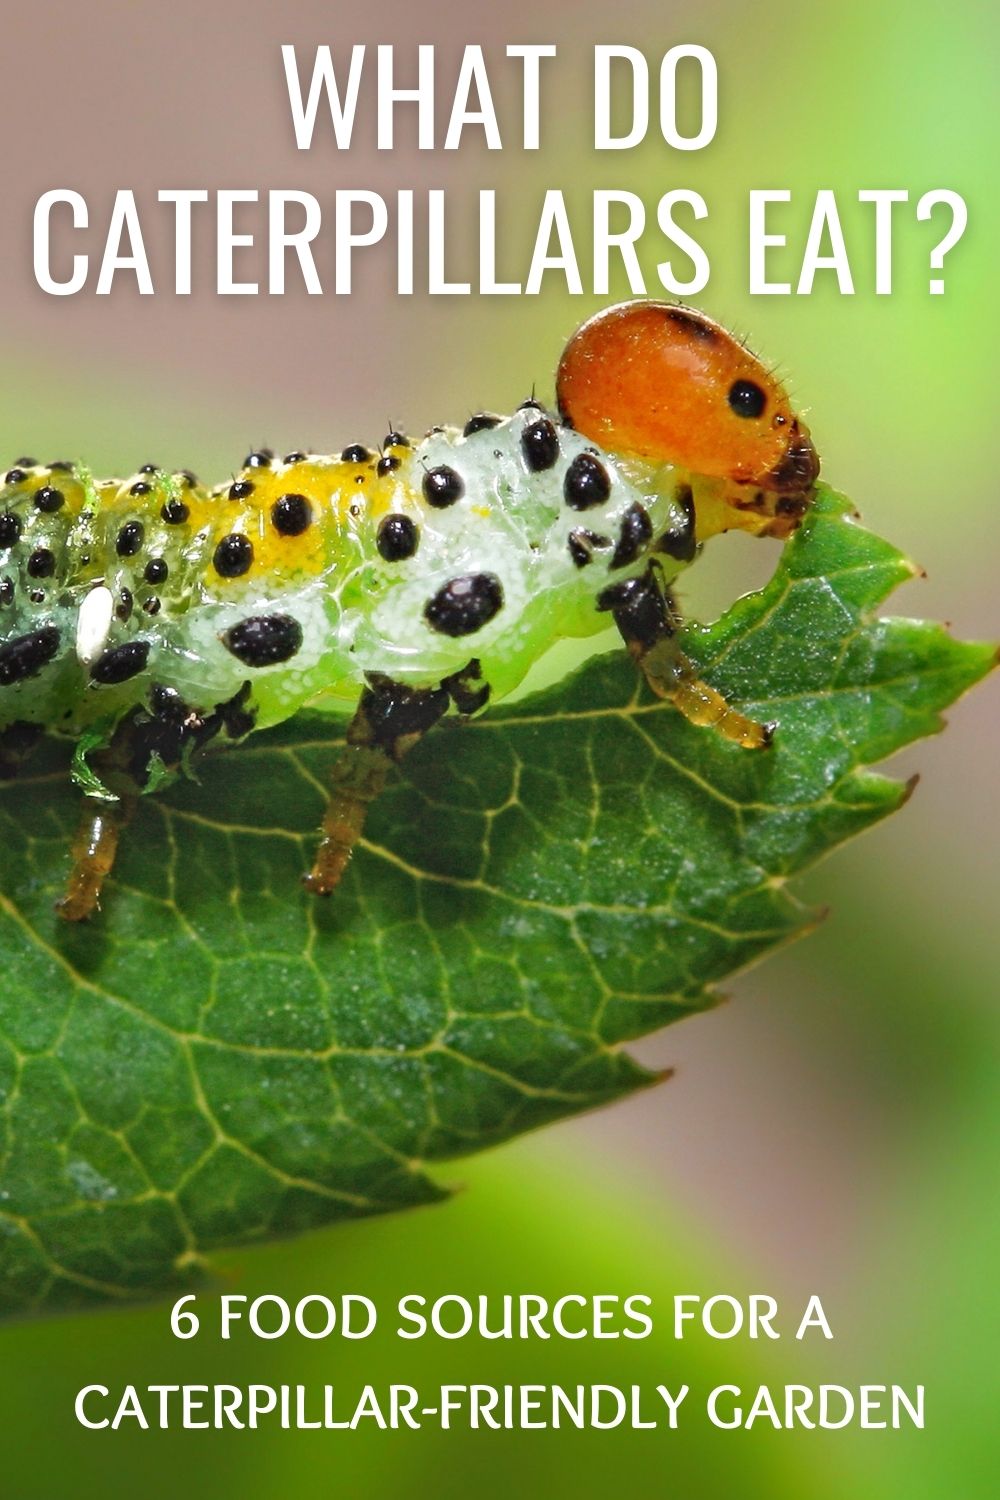 What do caterpillars eat? 6 Food Sources For A Caterpillar-Friendly Garden